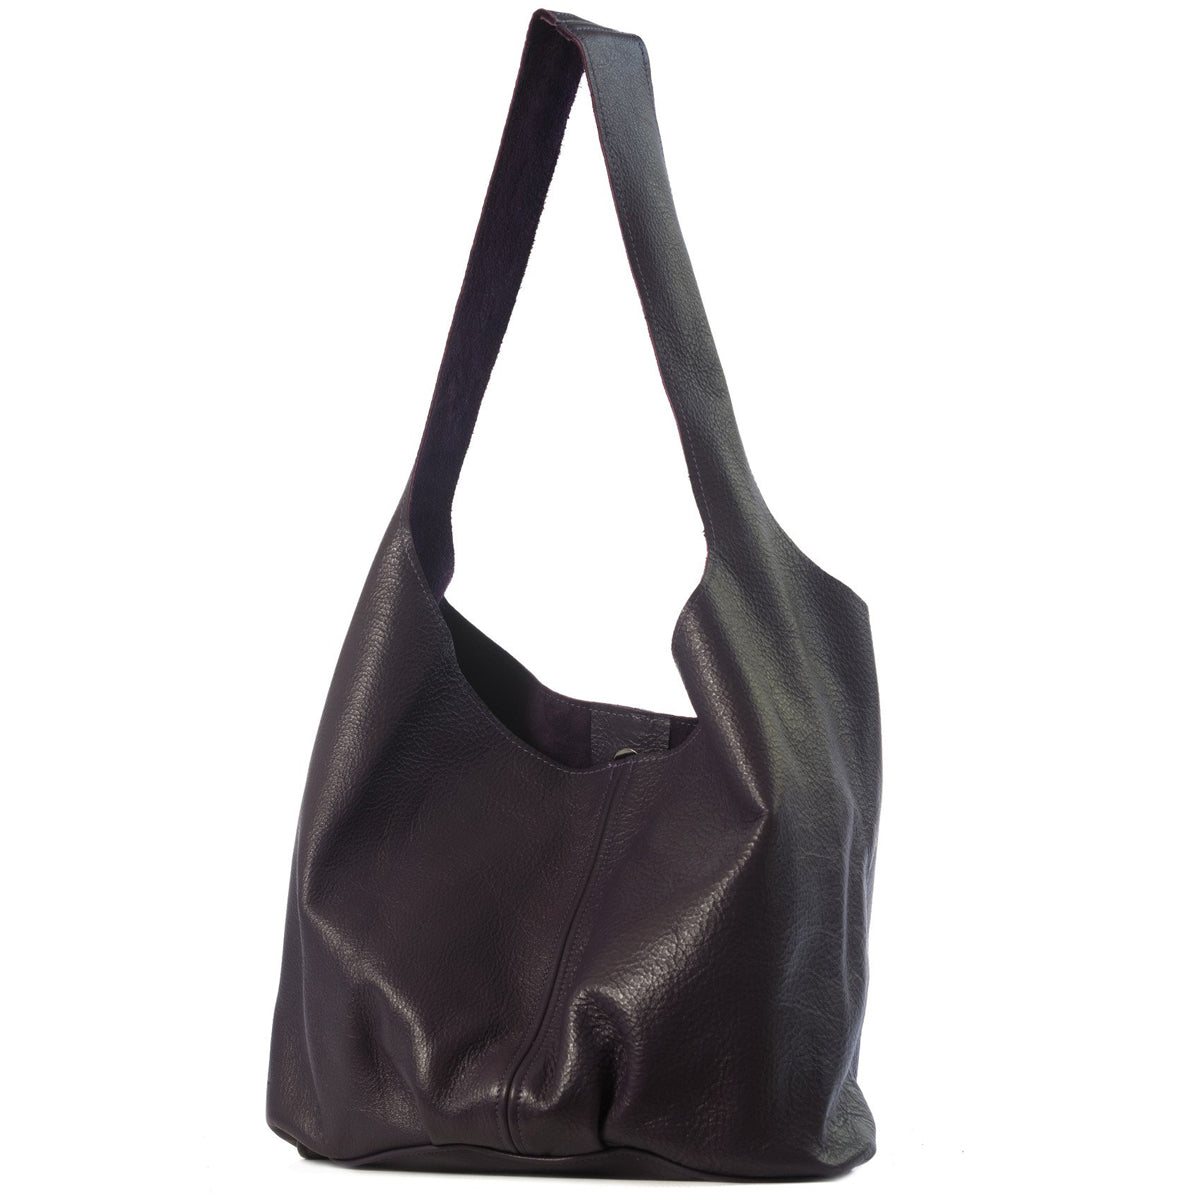 Black leather hobo style handbag handmade in the USA by Vicki Jean. 